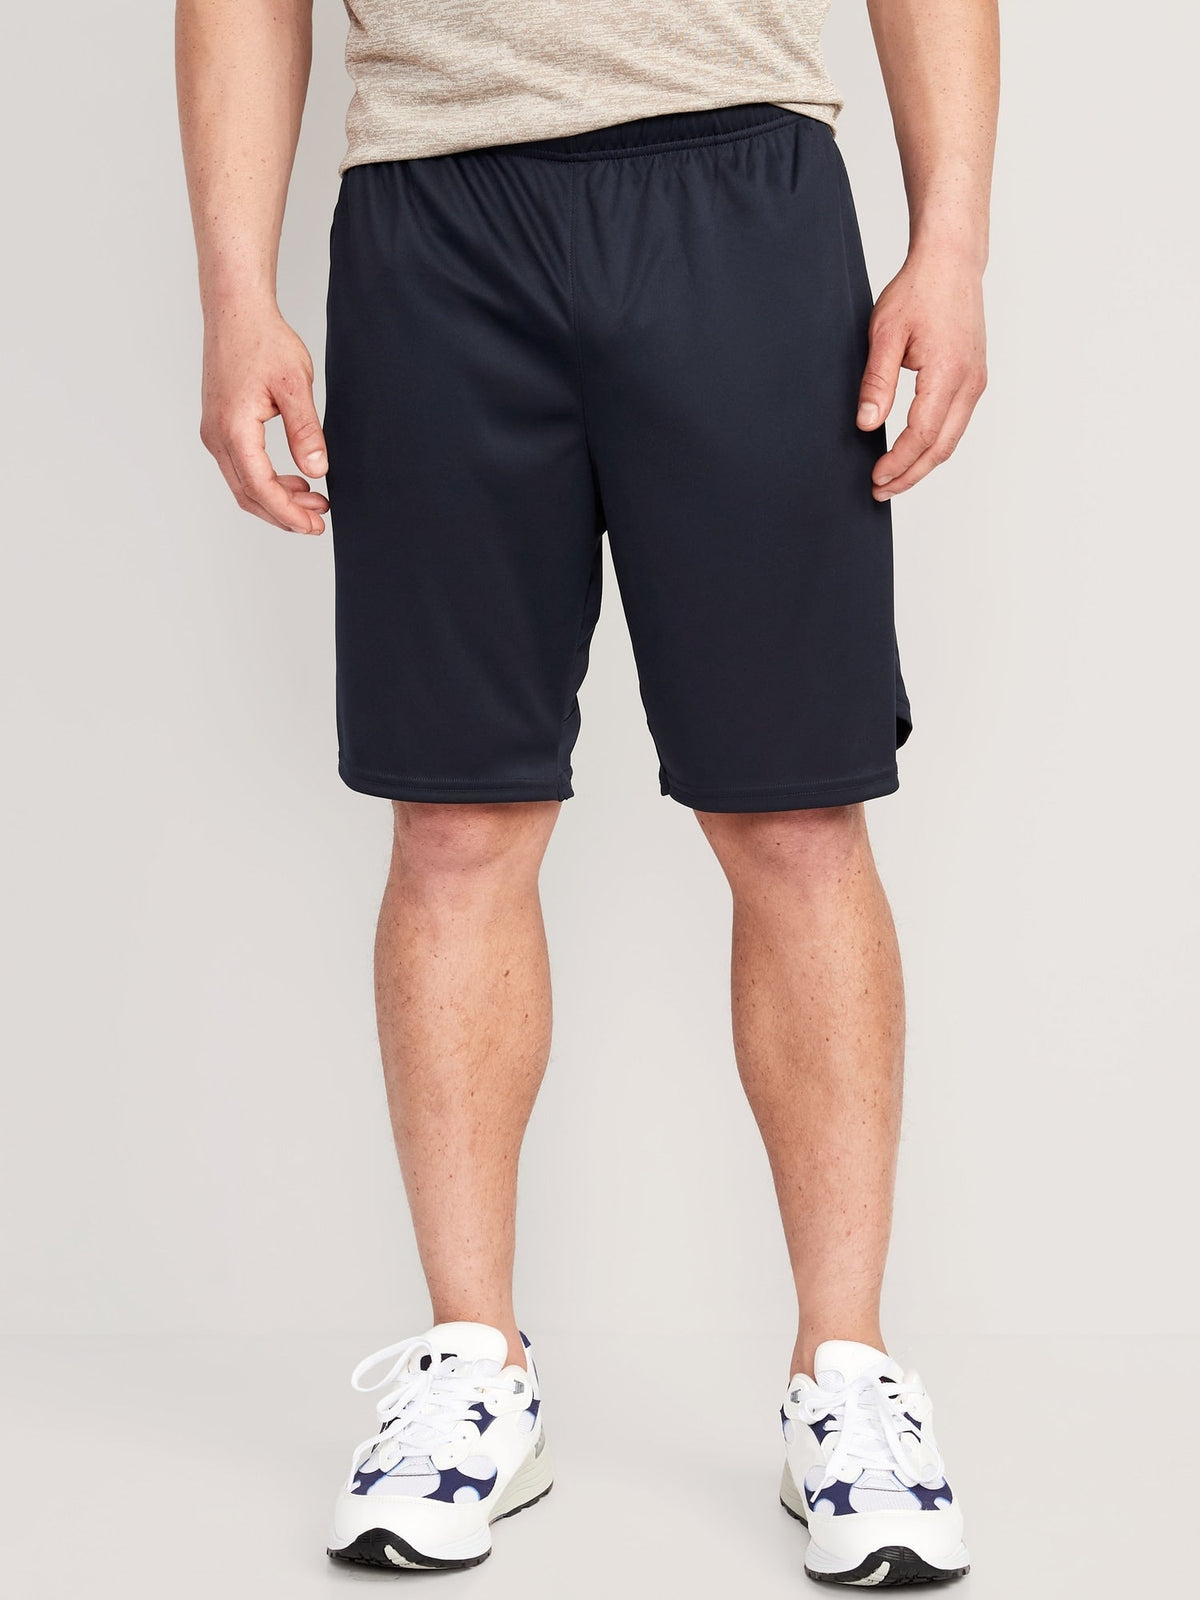 Go-Dry Mesh Basketball Shorts for Men -- 9-inch inseam - Old Navy